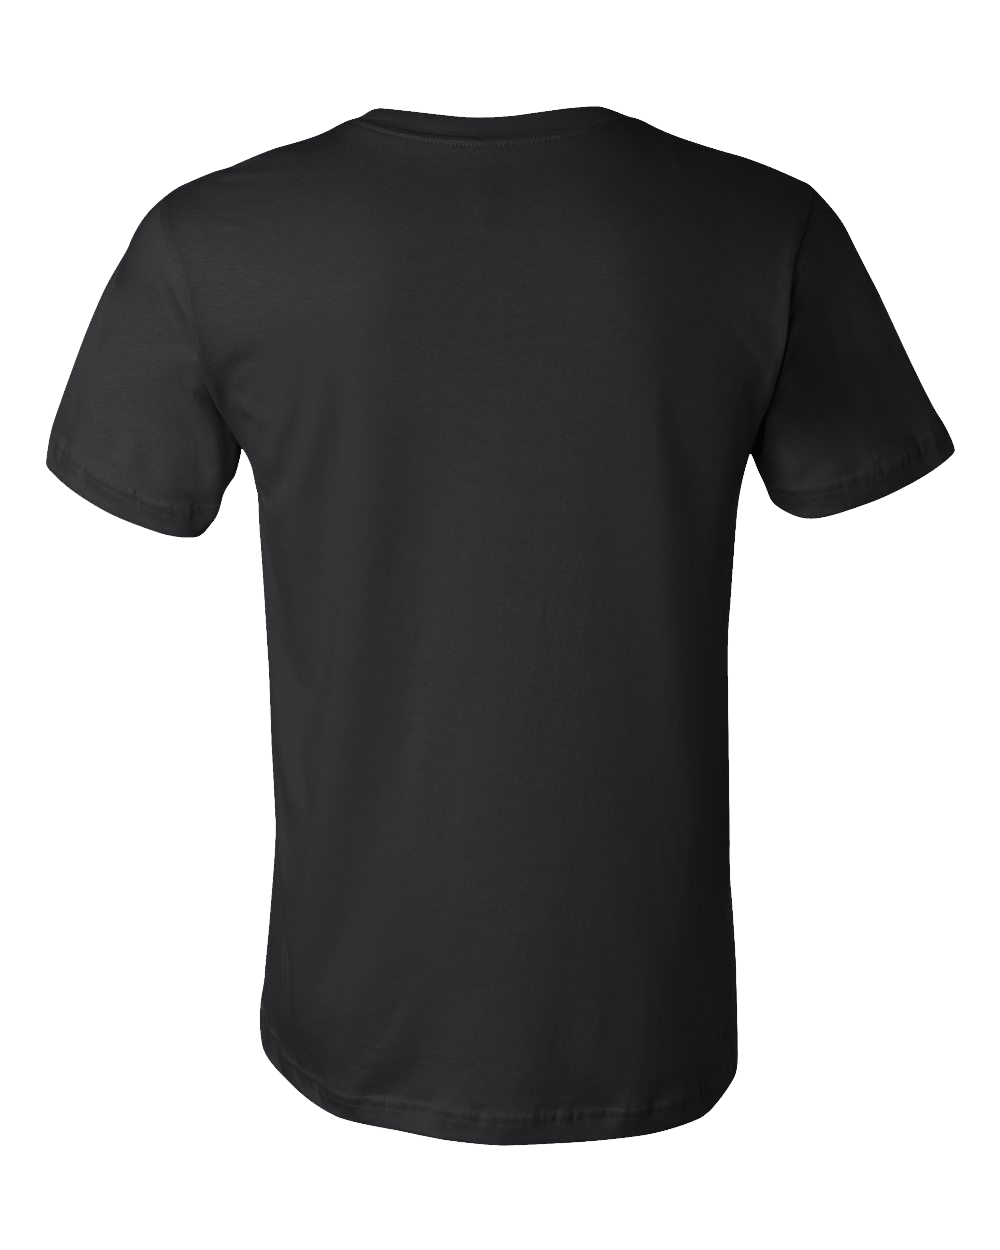 Standard Black Ames, IA | Retro, Vintage Style Iowa Pride  T-shirt